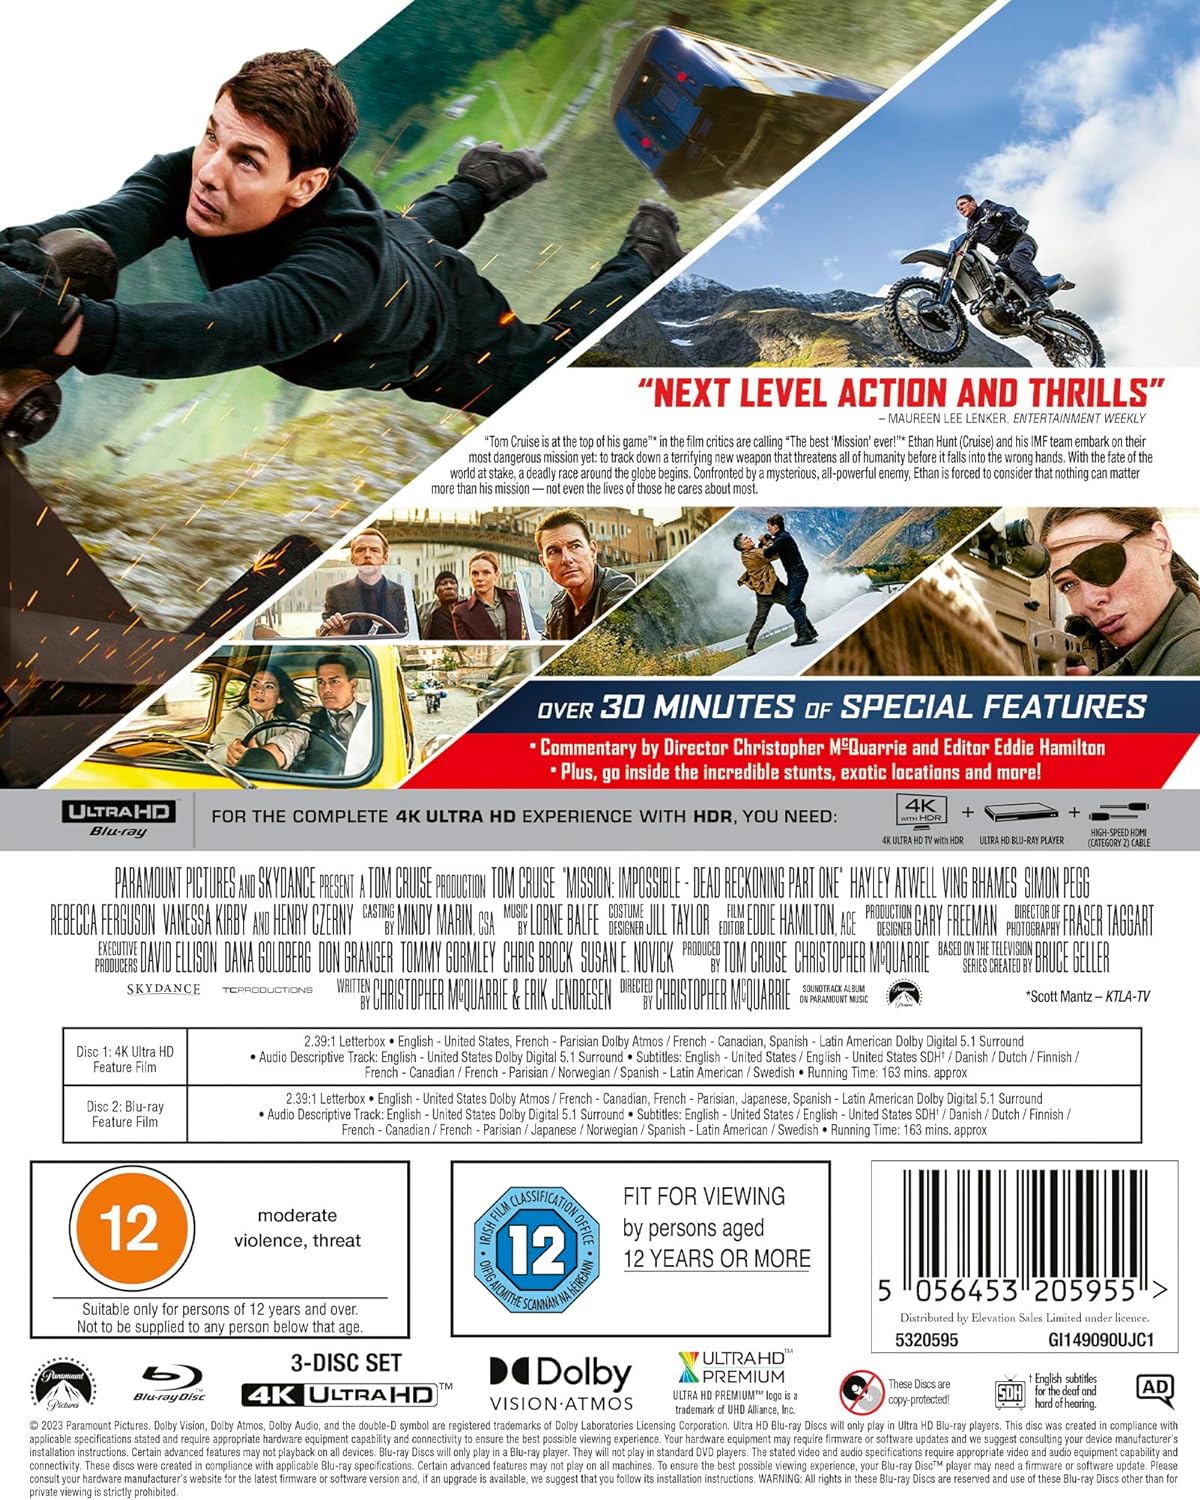 Mission Impossible Dead Reckoning Part 1 (Red Artwork) 4K UHD + Blu-ray SteelBook (Paramount UK/Region Free/B)